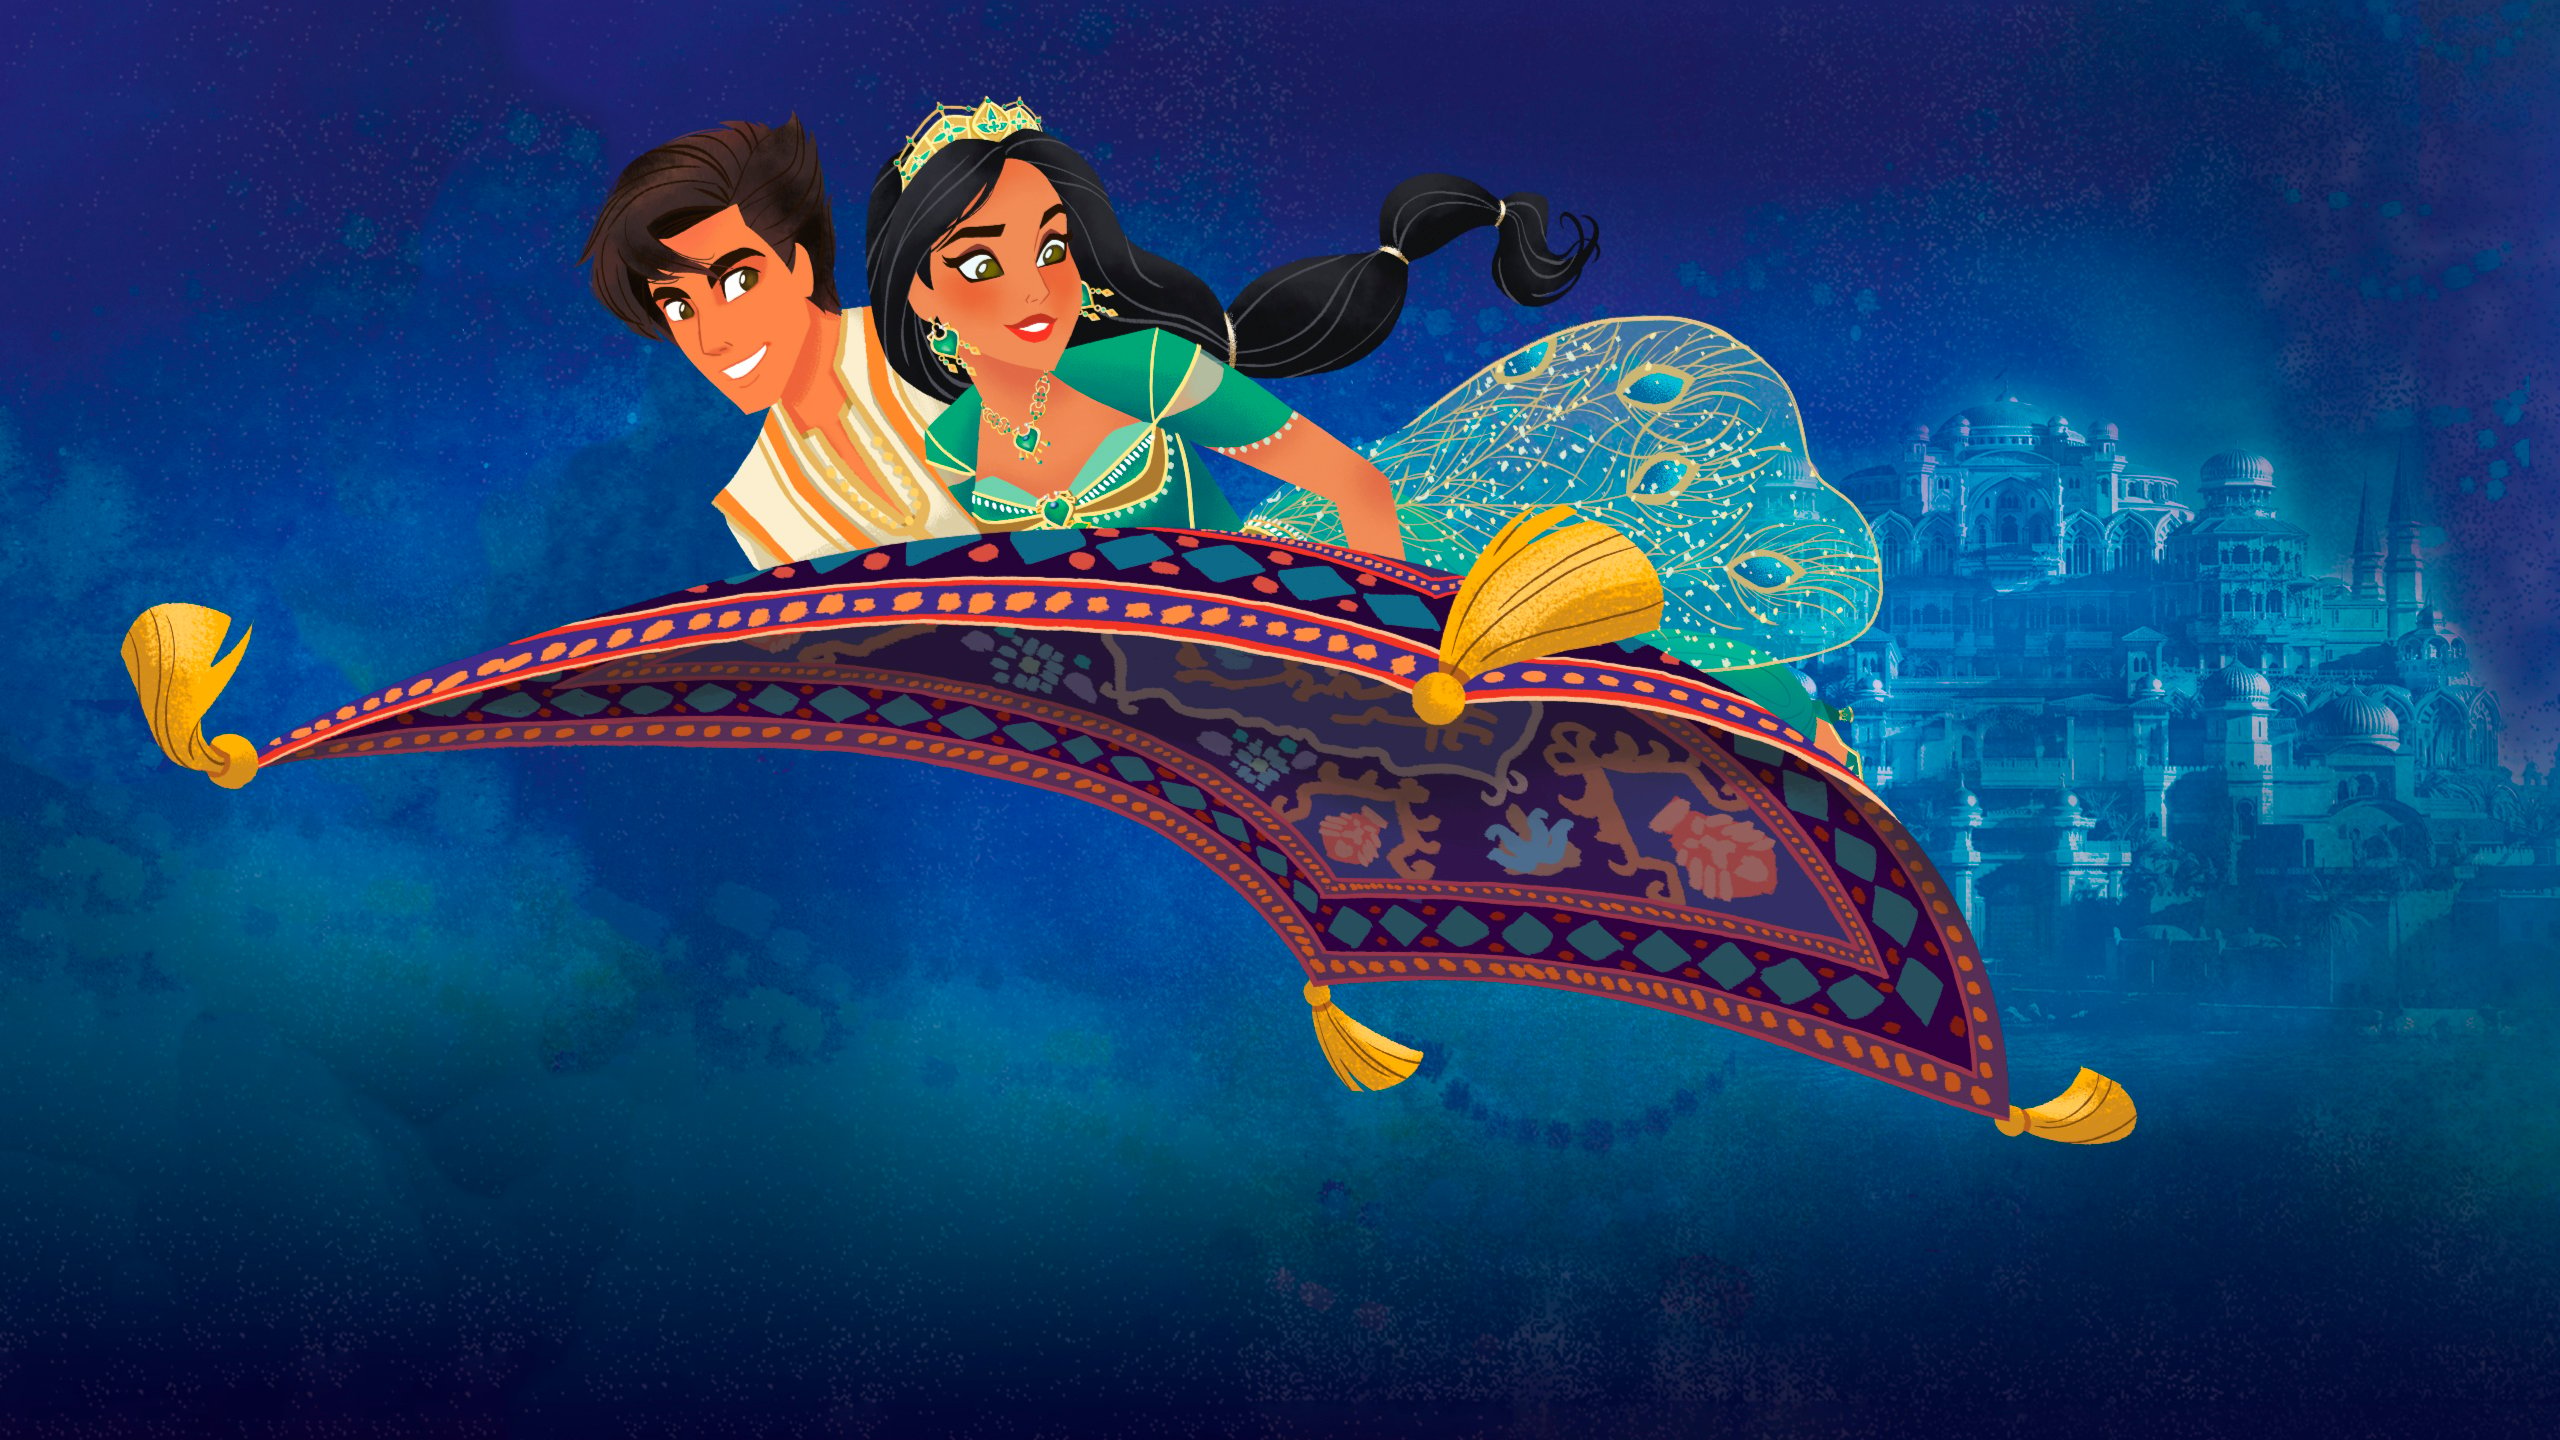 Cartoonish and artistic HD wallpaper of Aladdin 2019 movie